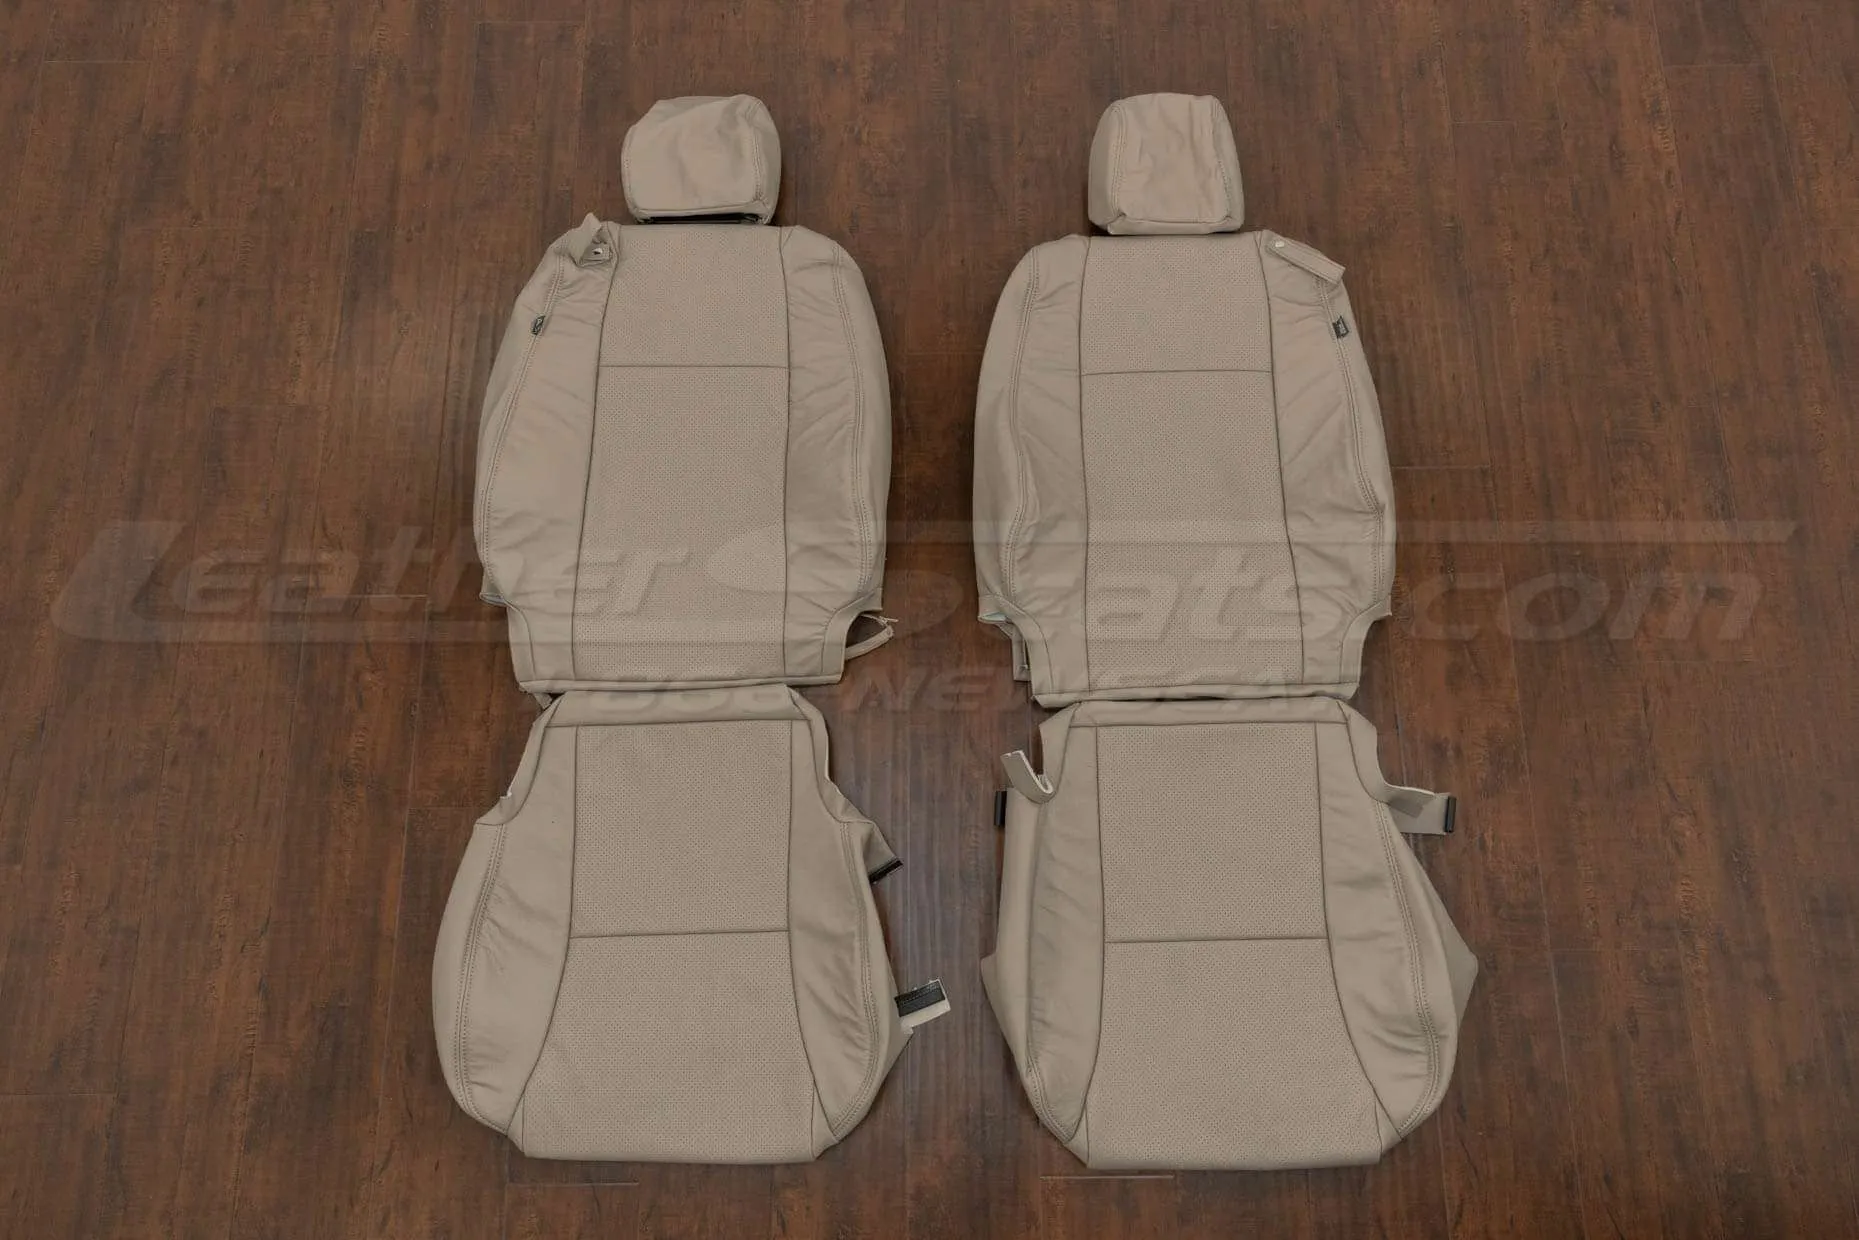 Toyota Solara Leather Seat Kit - Ivory - Front seat upholstery